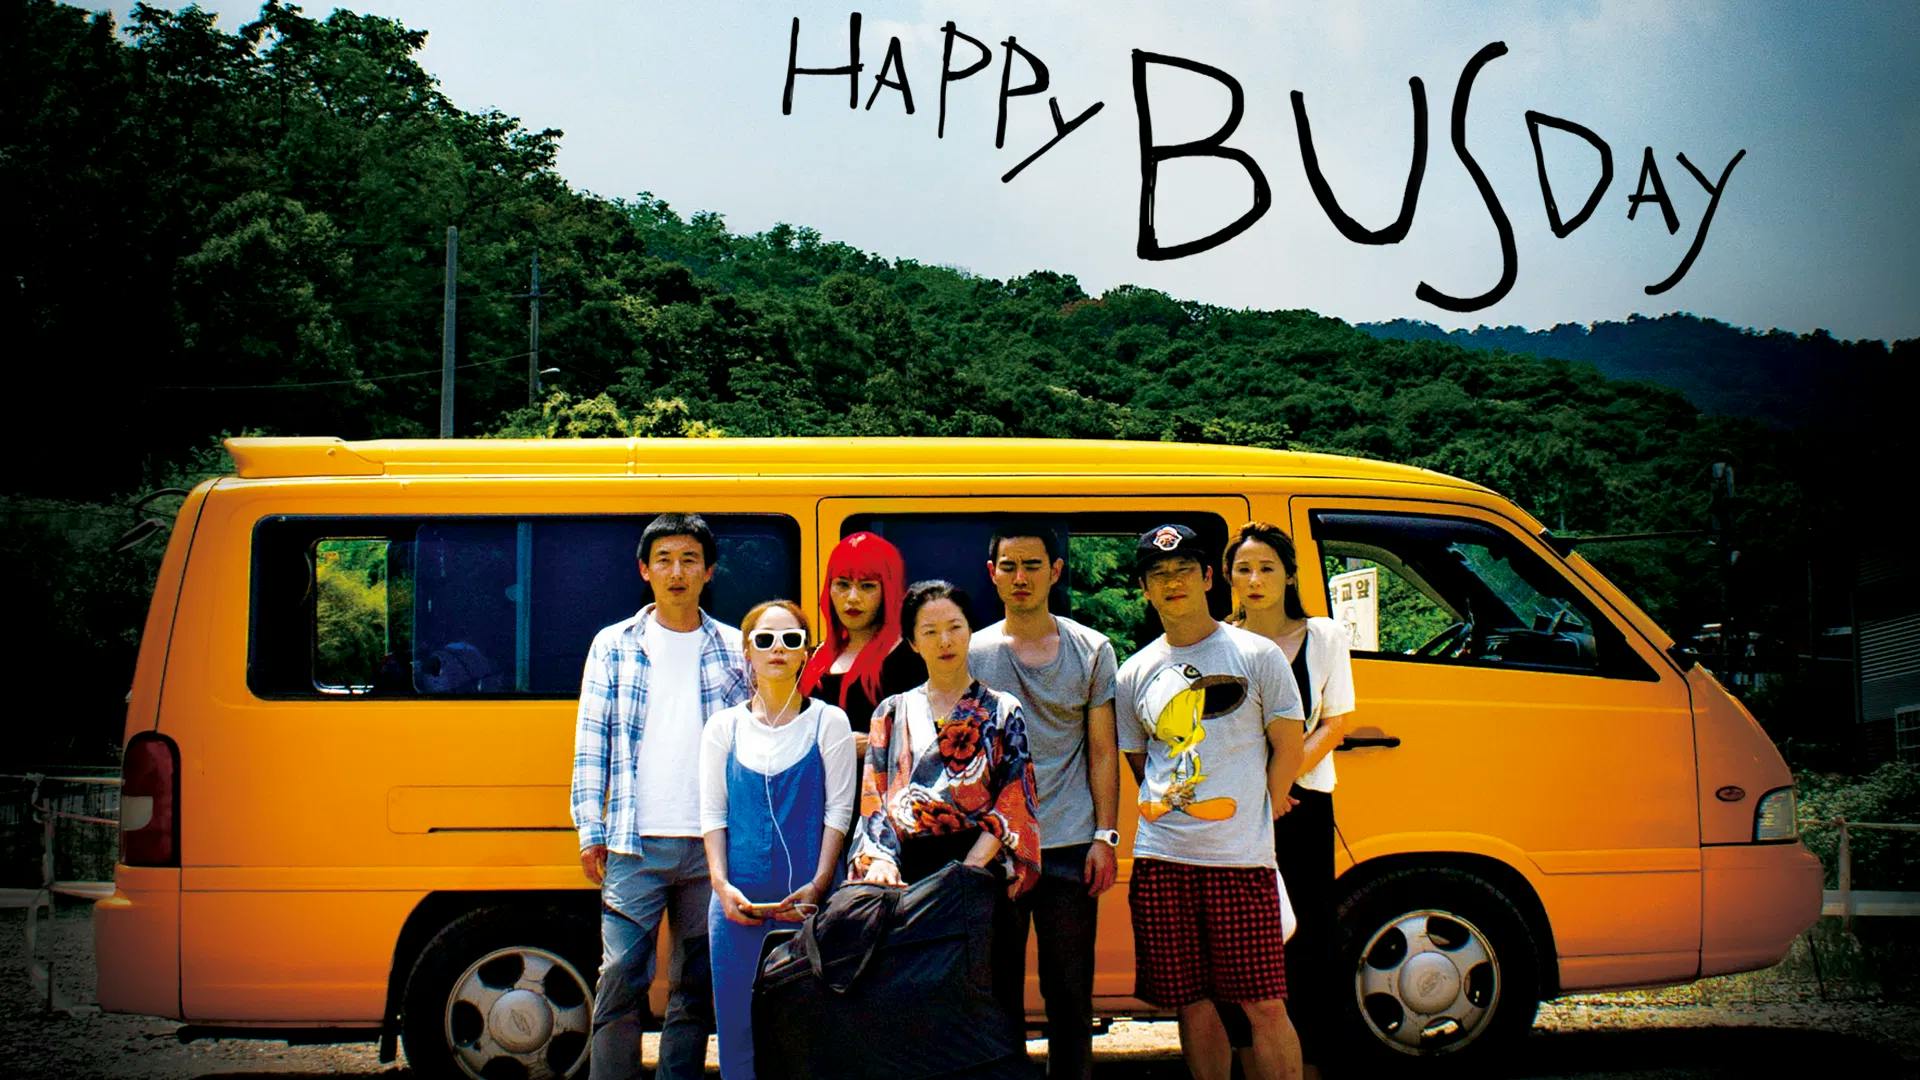 Happy Bus Day